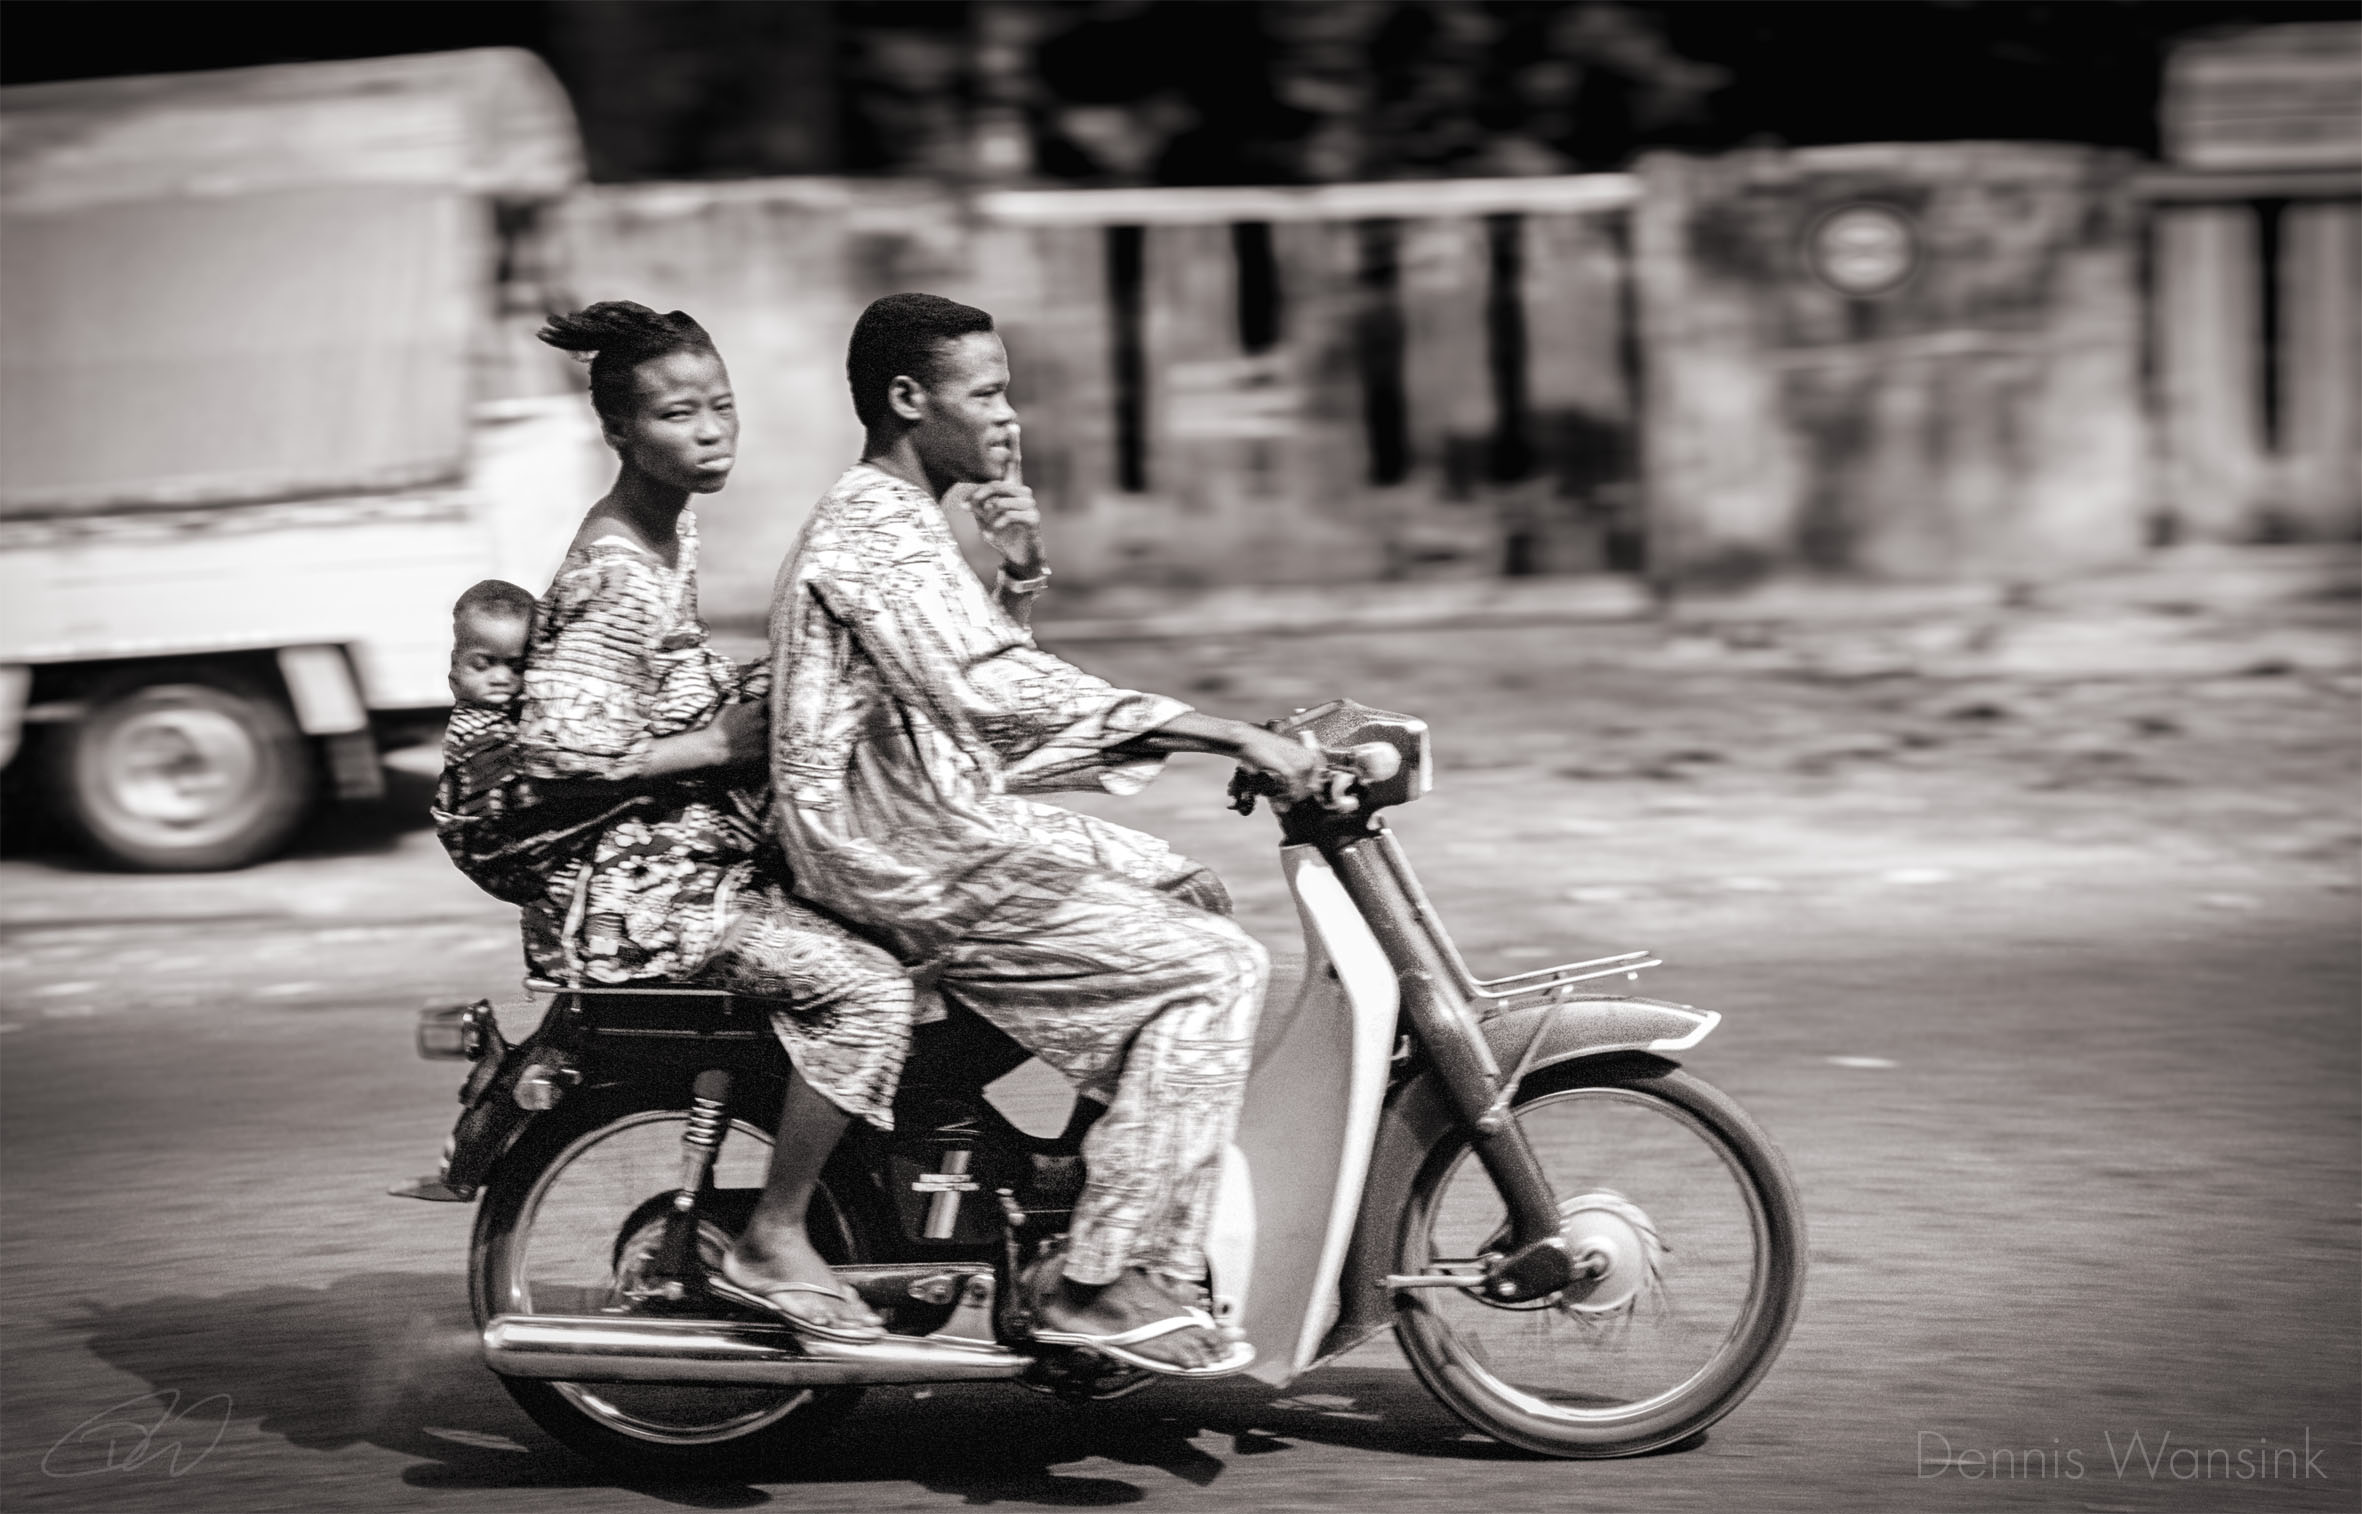 Motor taxi, Benin (© Dennis Wansink)